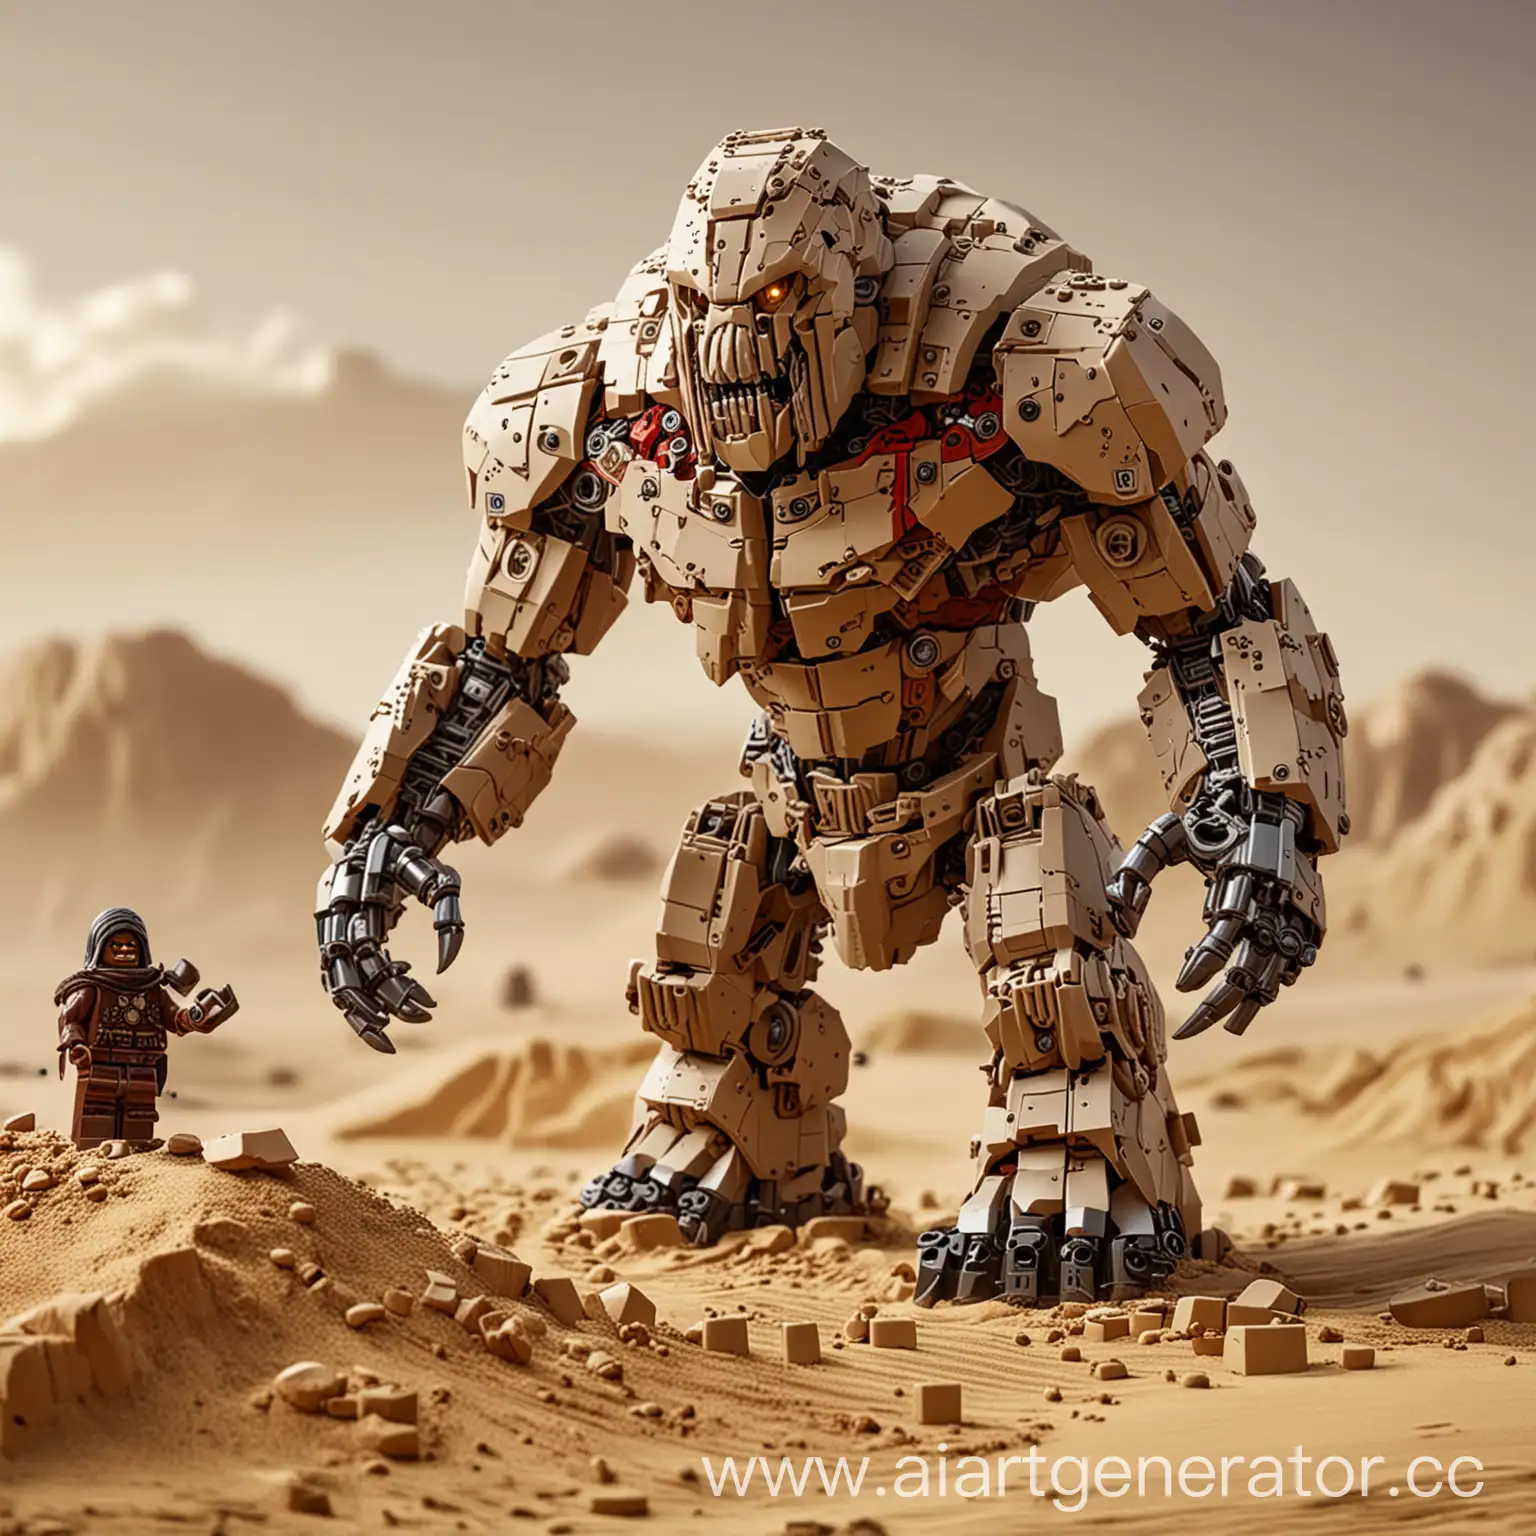 Giant-Sand-Titan-Attack-on-Desert-Village-with-Lego-Set-4K-Image